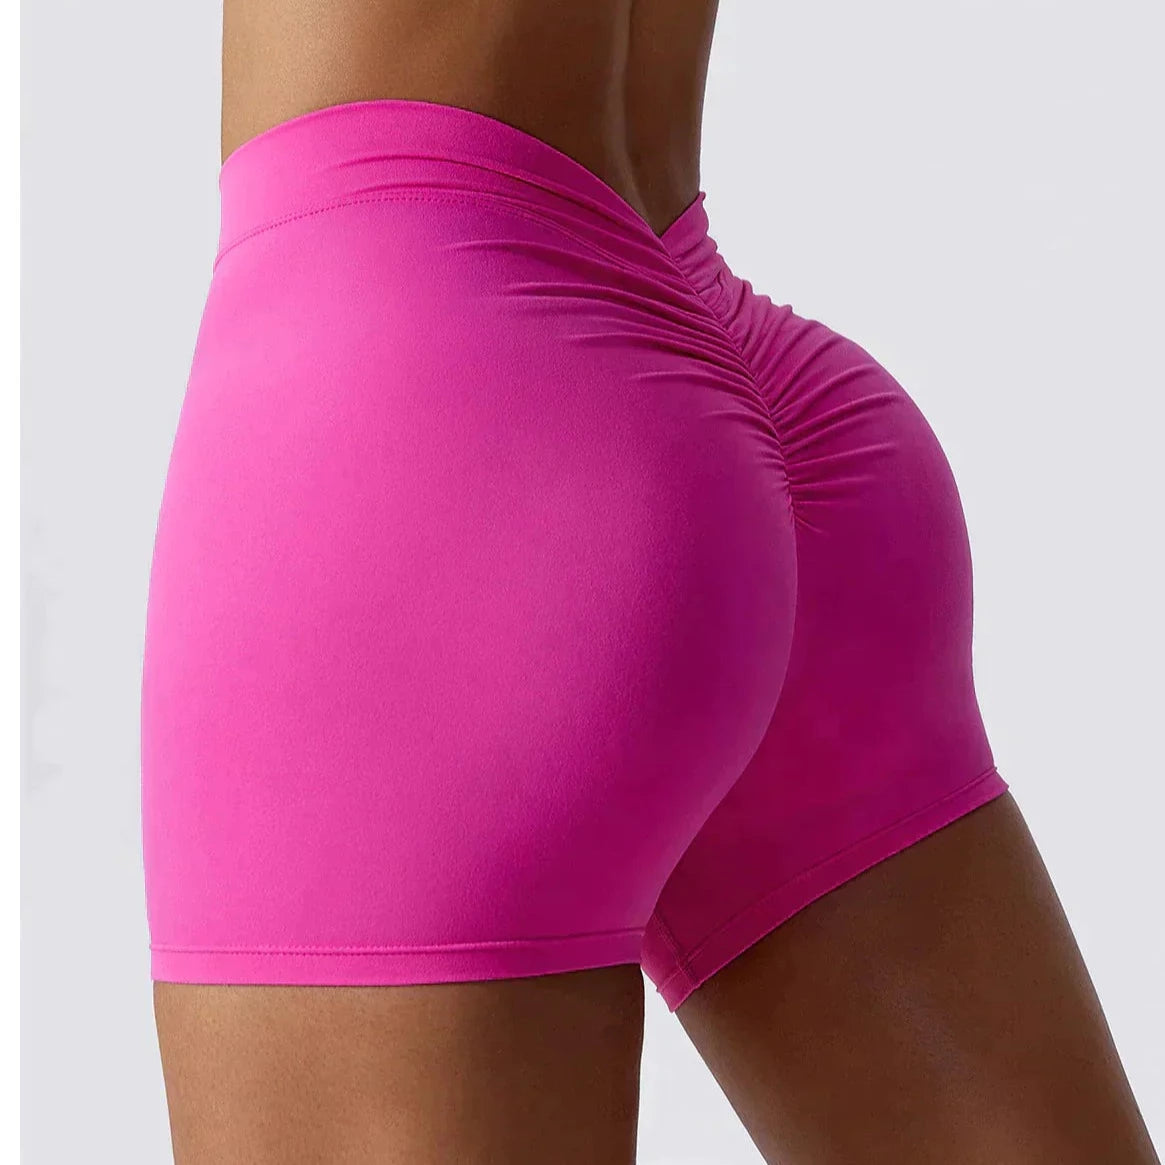 Best Selling Brazilian Scrunch Gym Shorts With deep back V design